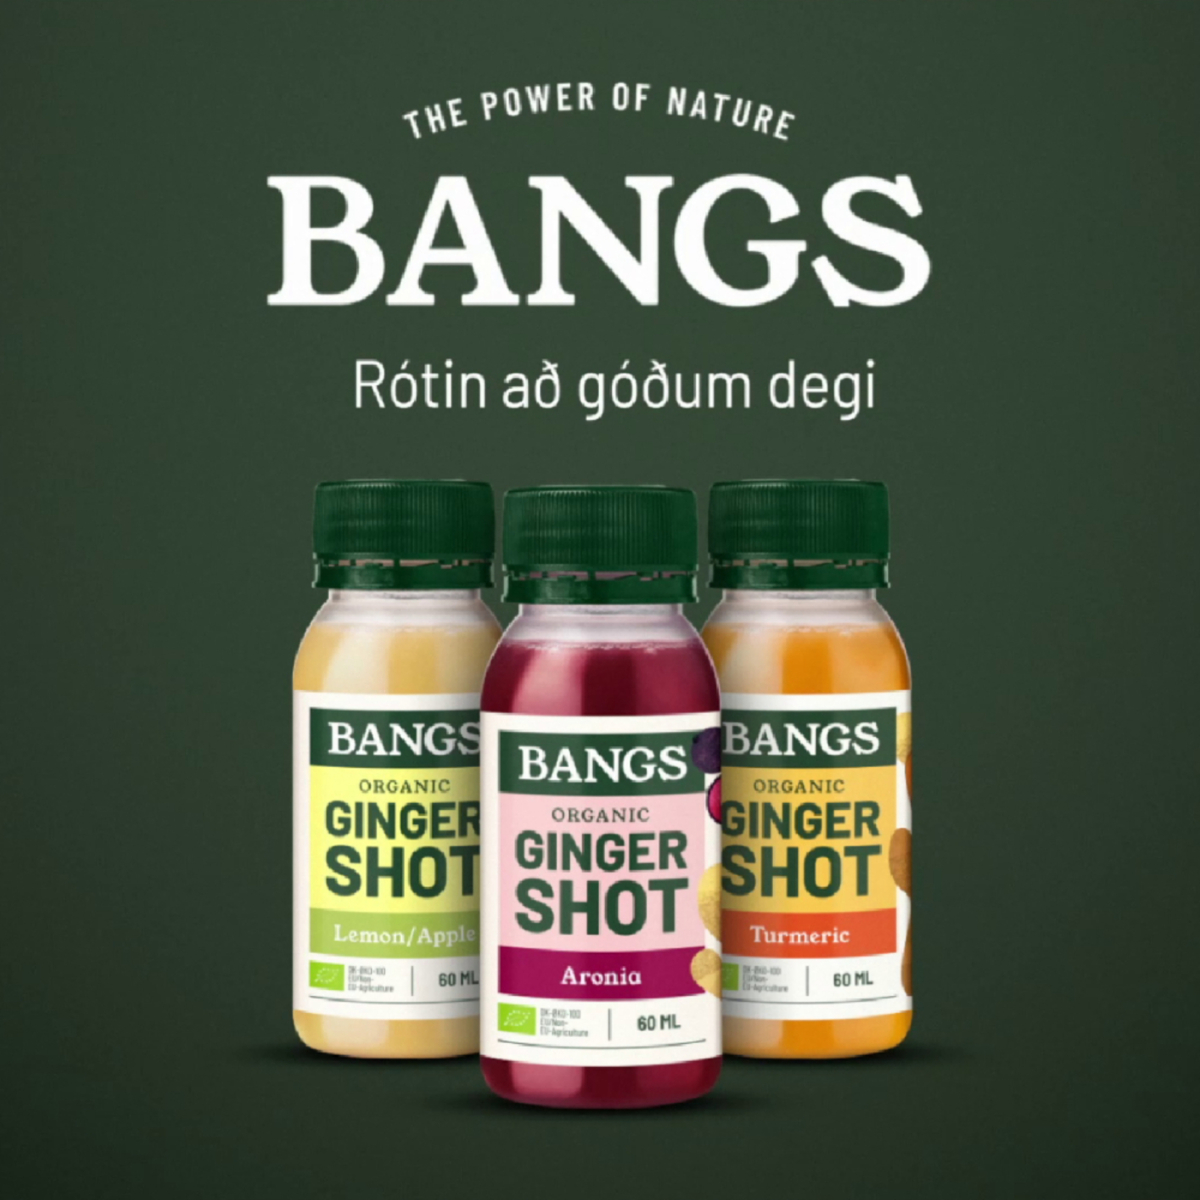 Bangs Organic Ginger Shot Turmeric 60 ml